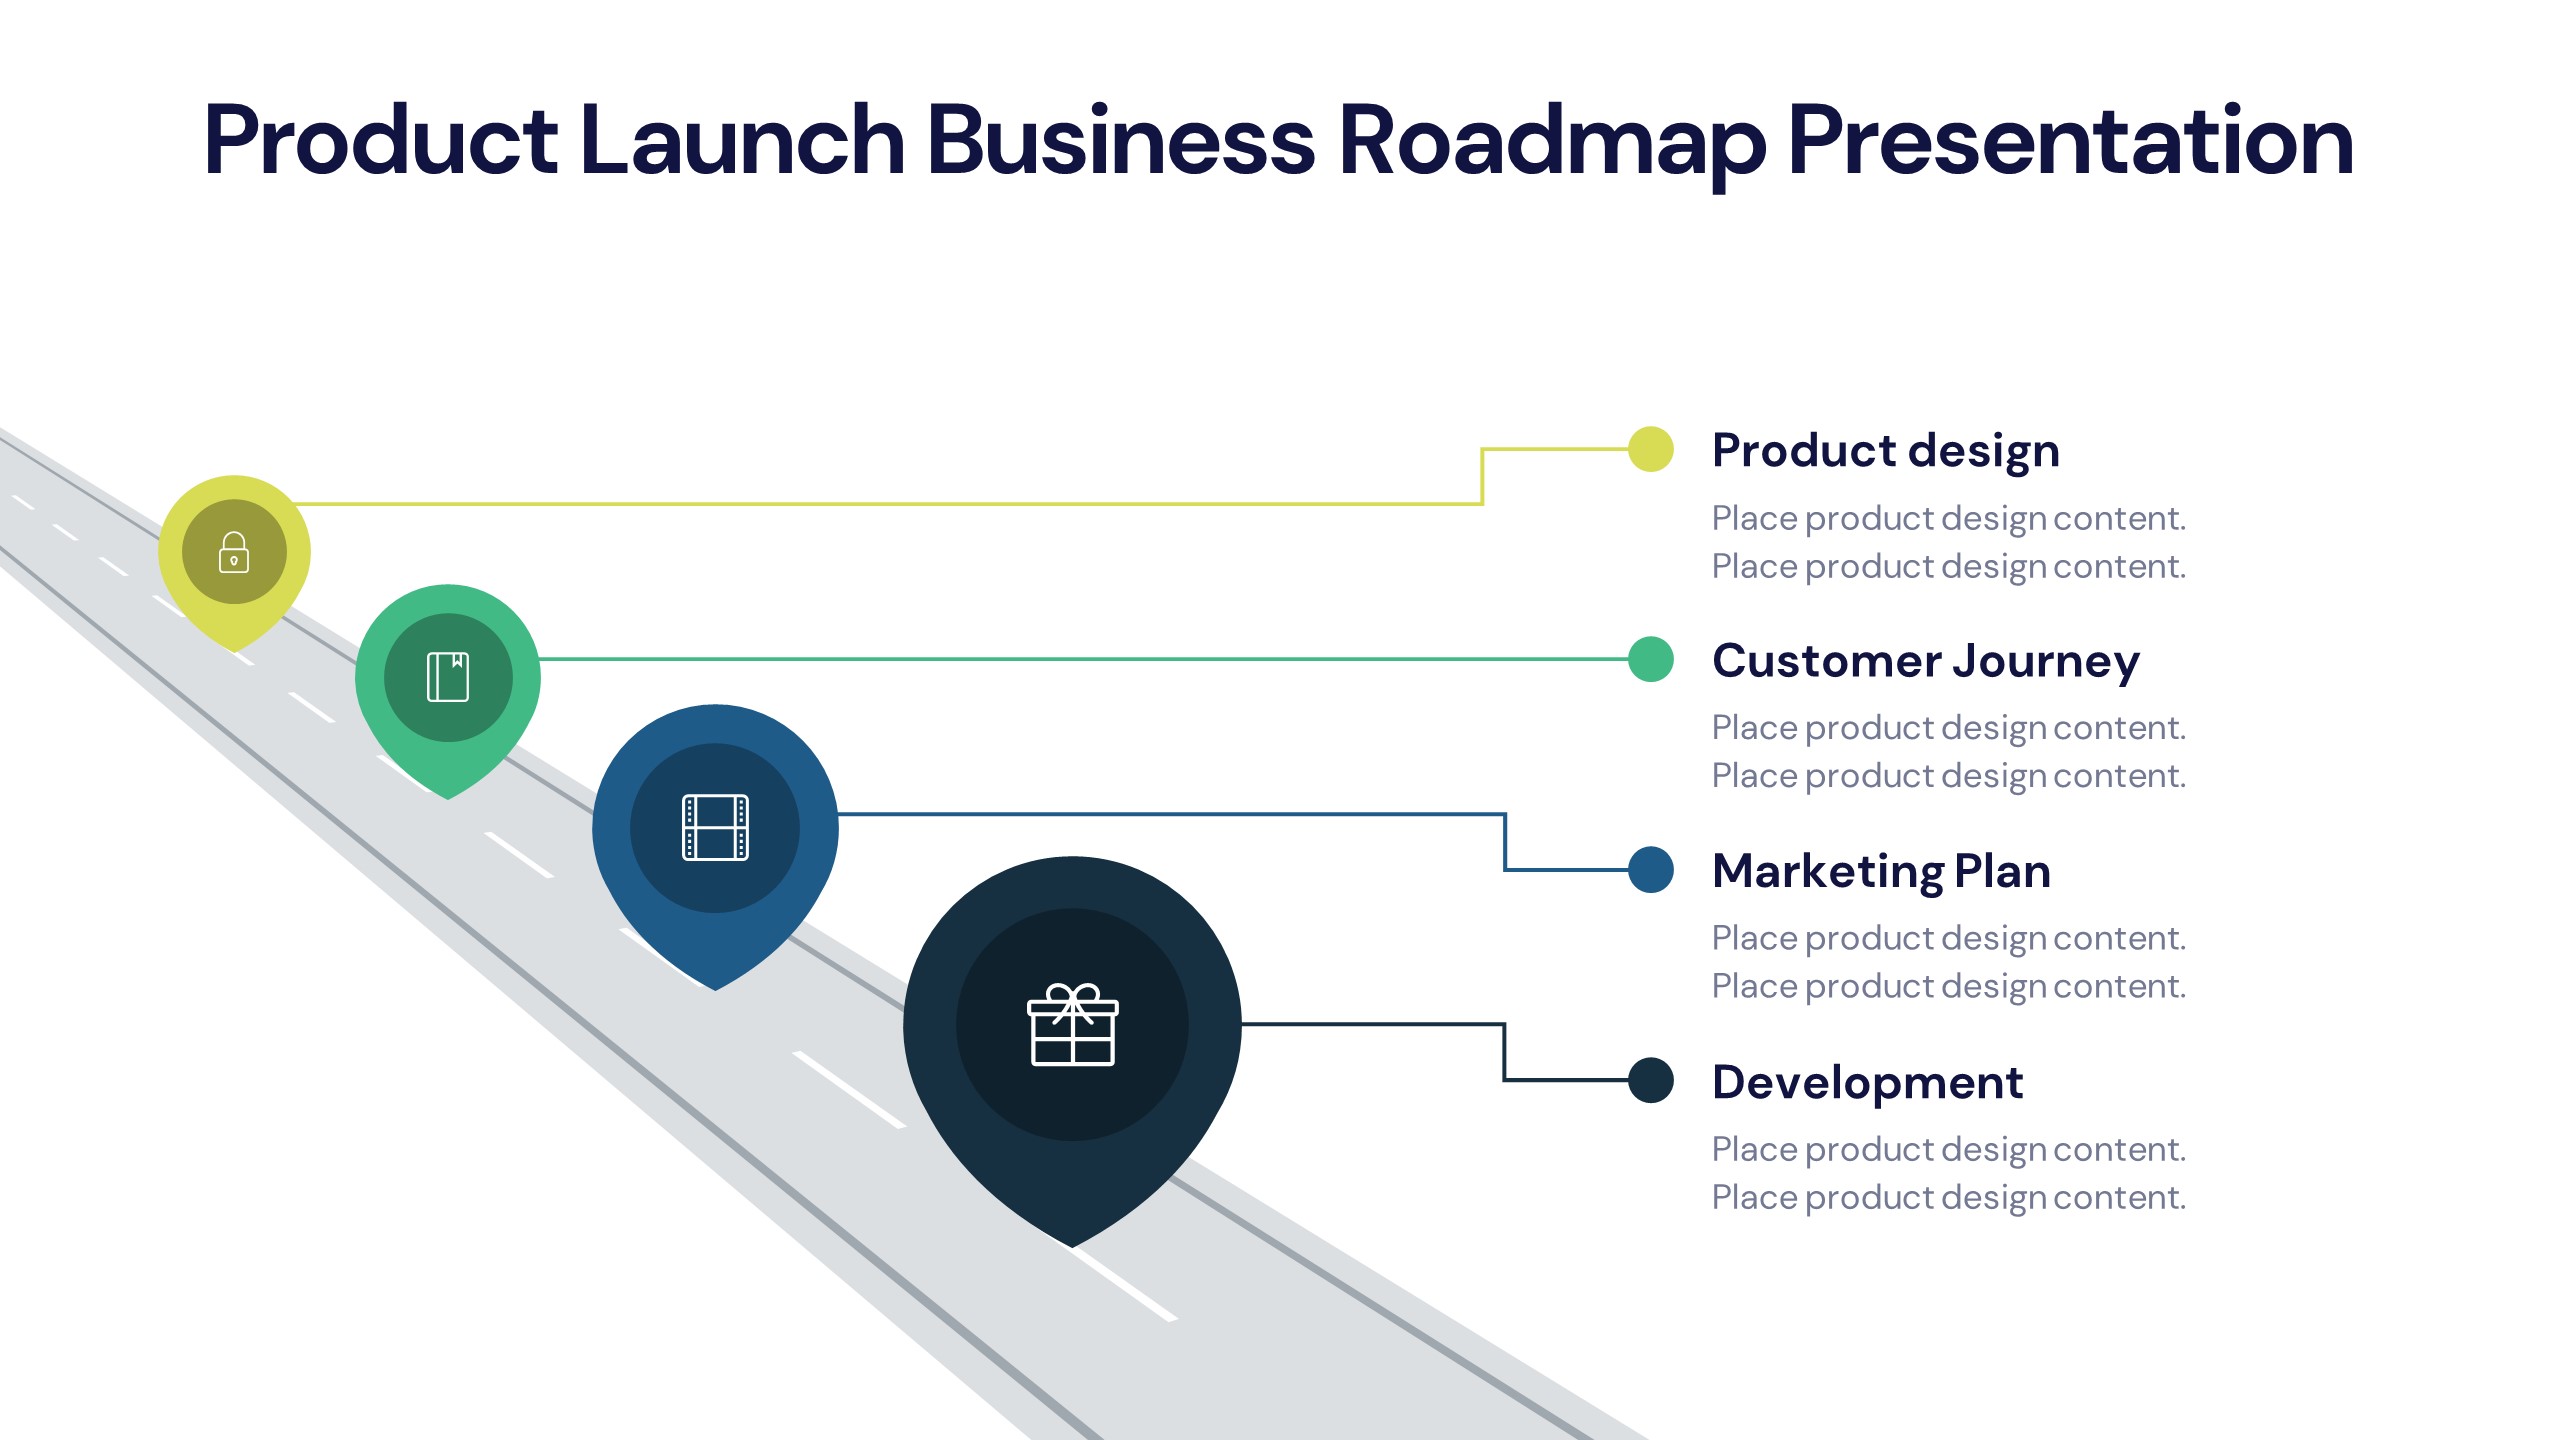 Product Launch Business Roadmap Presentation